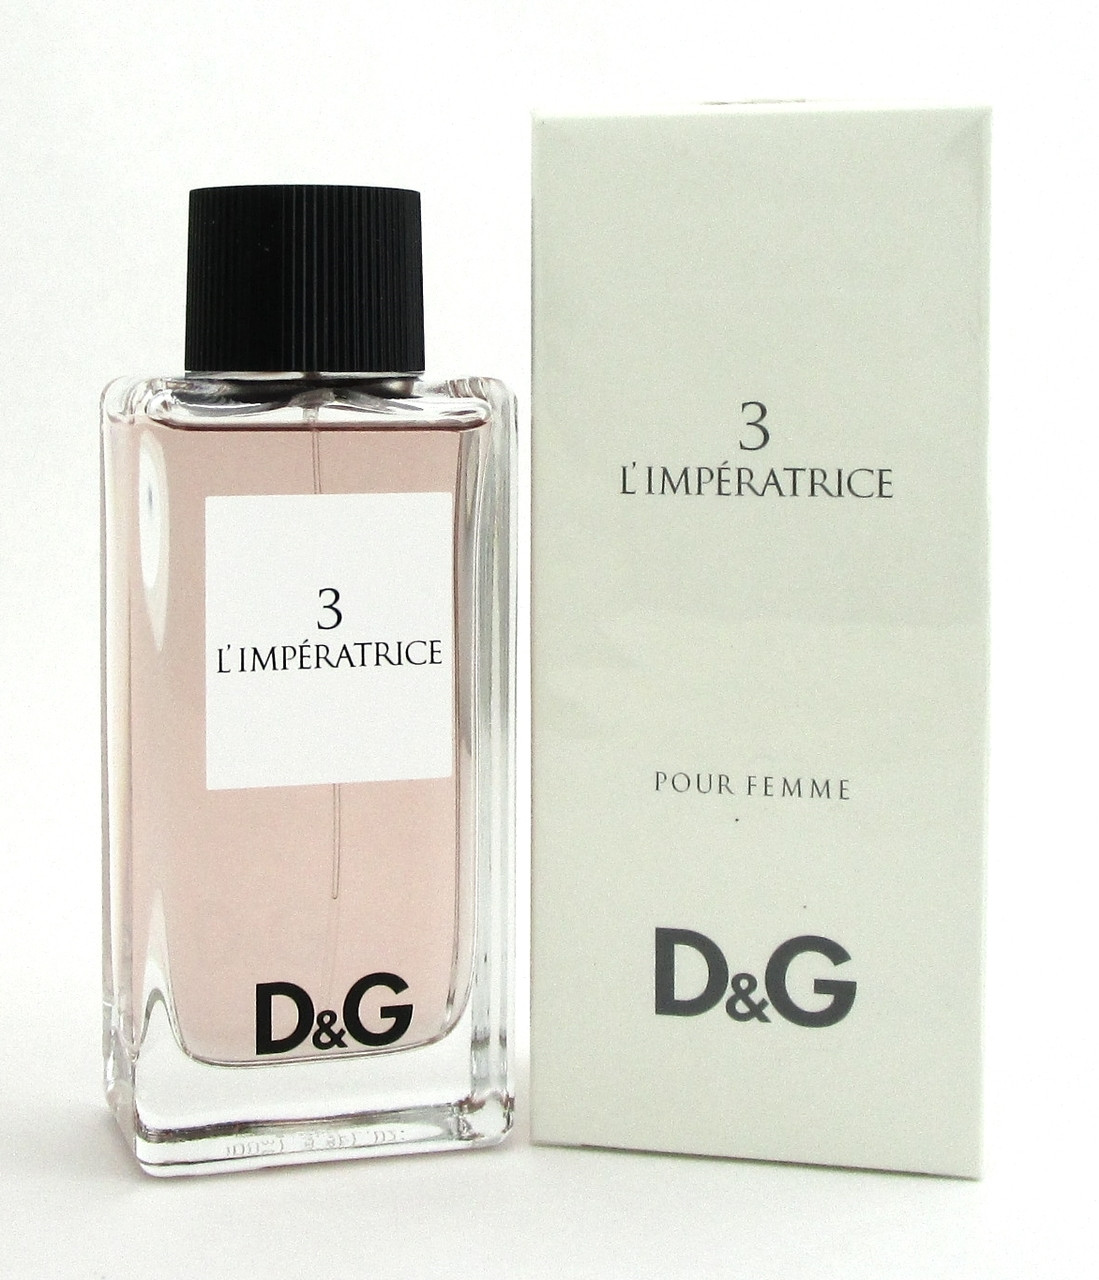 3 L'Imperatrice by Dolce & Gabbana 3.3 oz. EDT Spray for Women. New ...